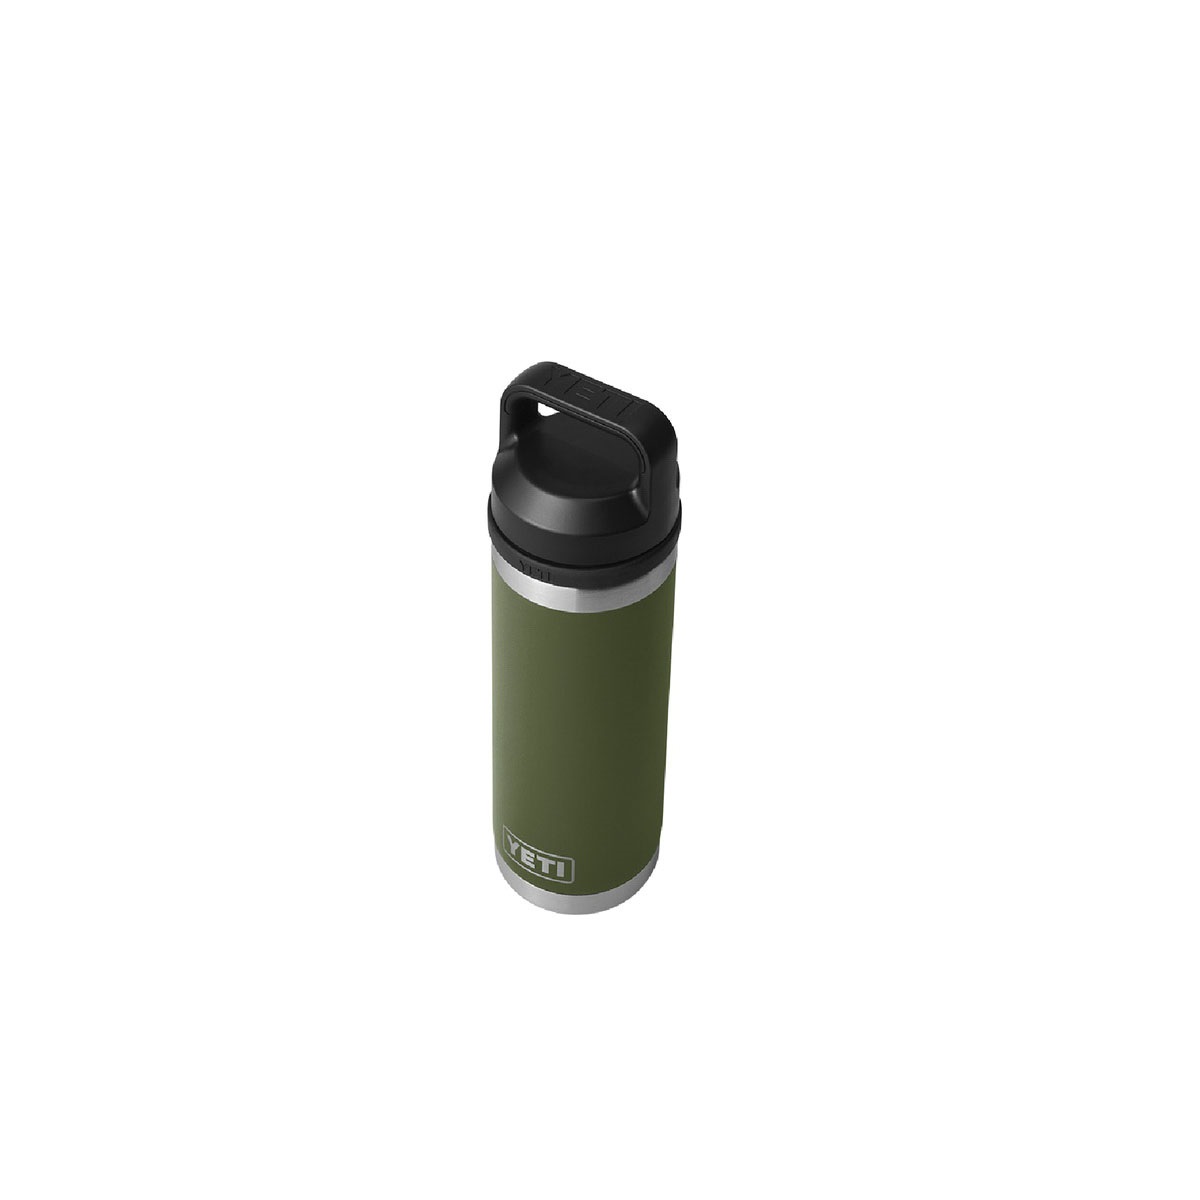 18oz Yeti Echo-Sigma Rambler Bottle with Chug Cap